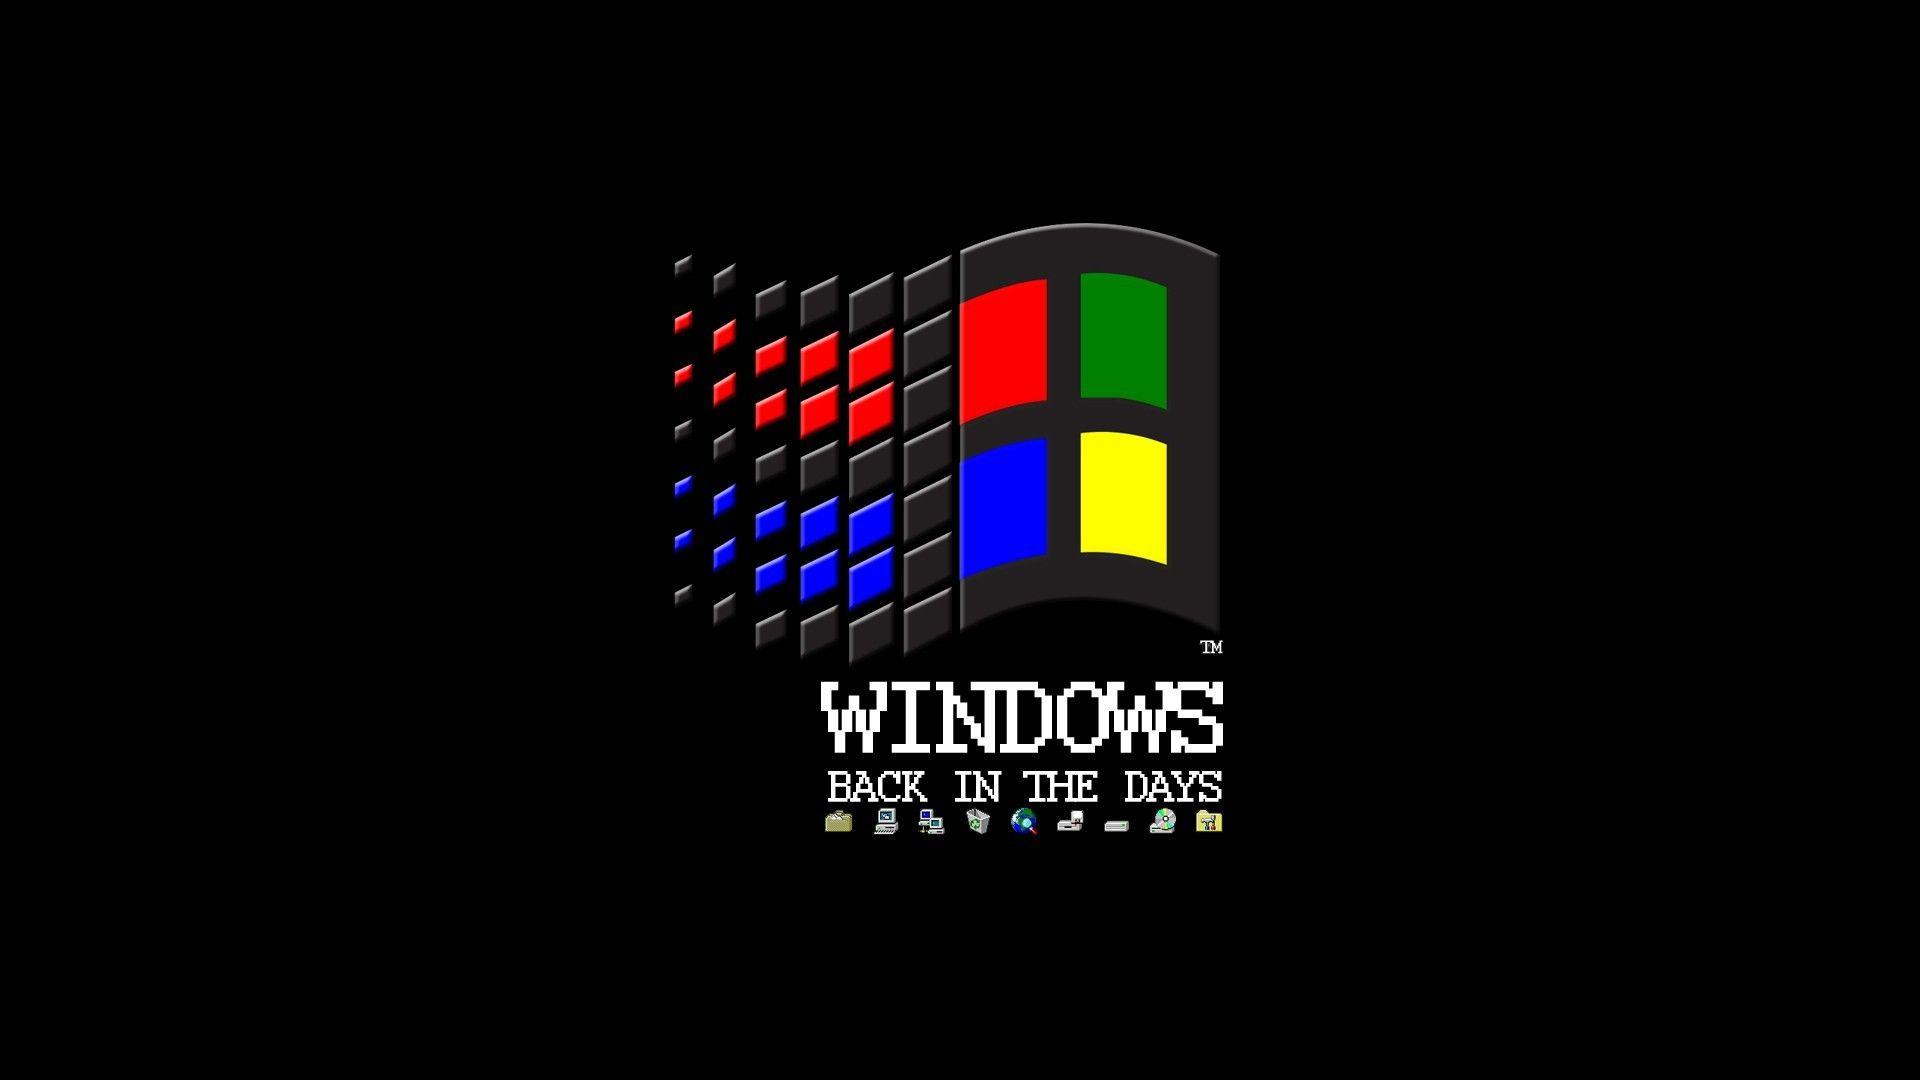 Old Windows Desktop Wallpapers - Top Free Old Windows Desktop